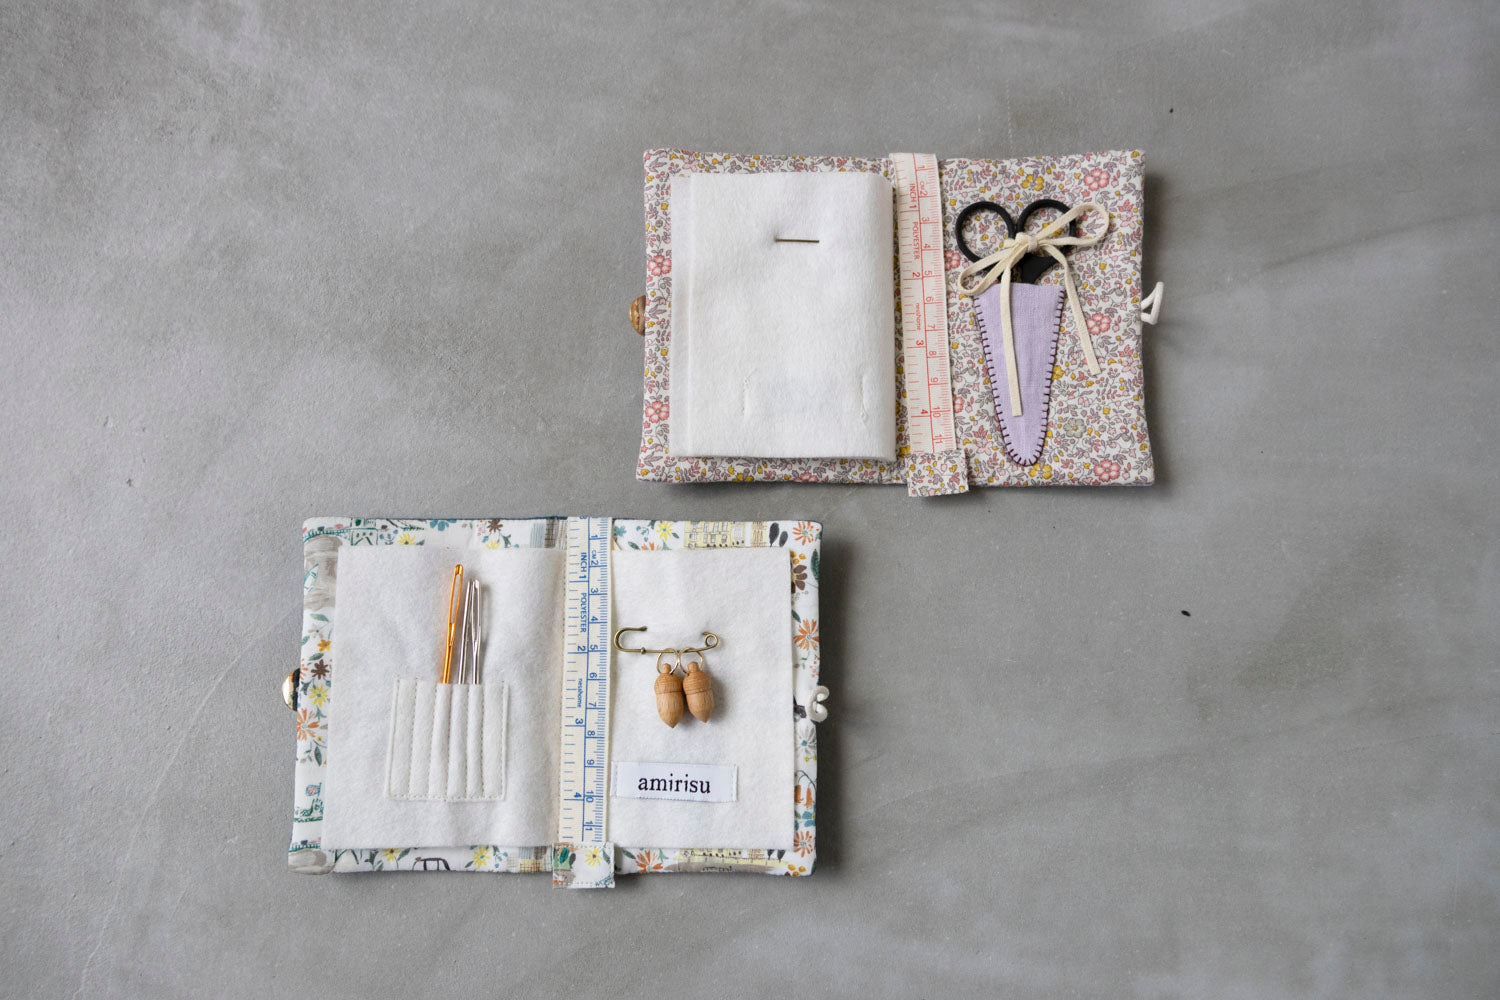 Sewing Tool Box – amirisu kurumi